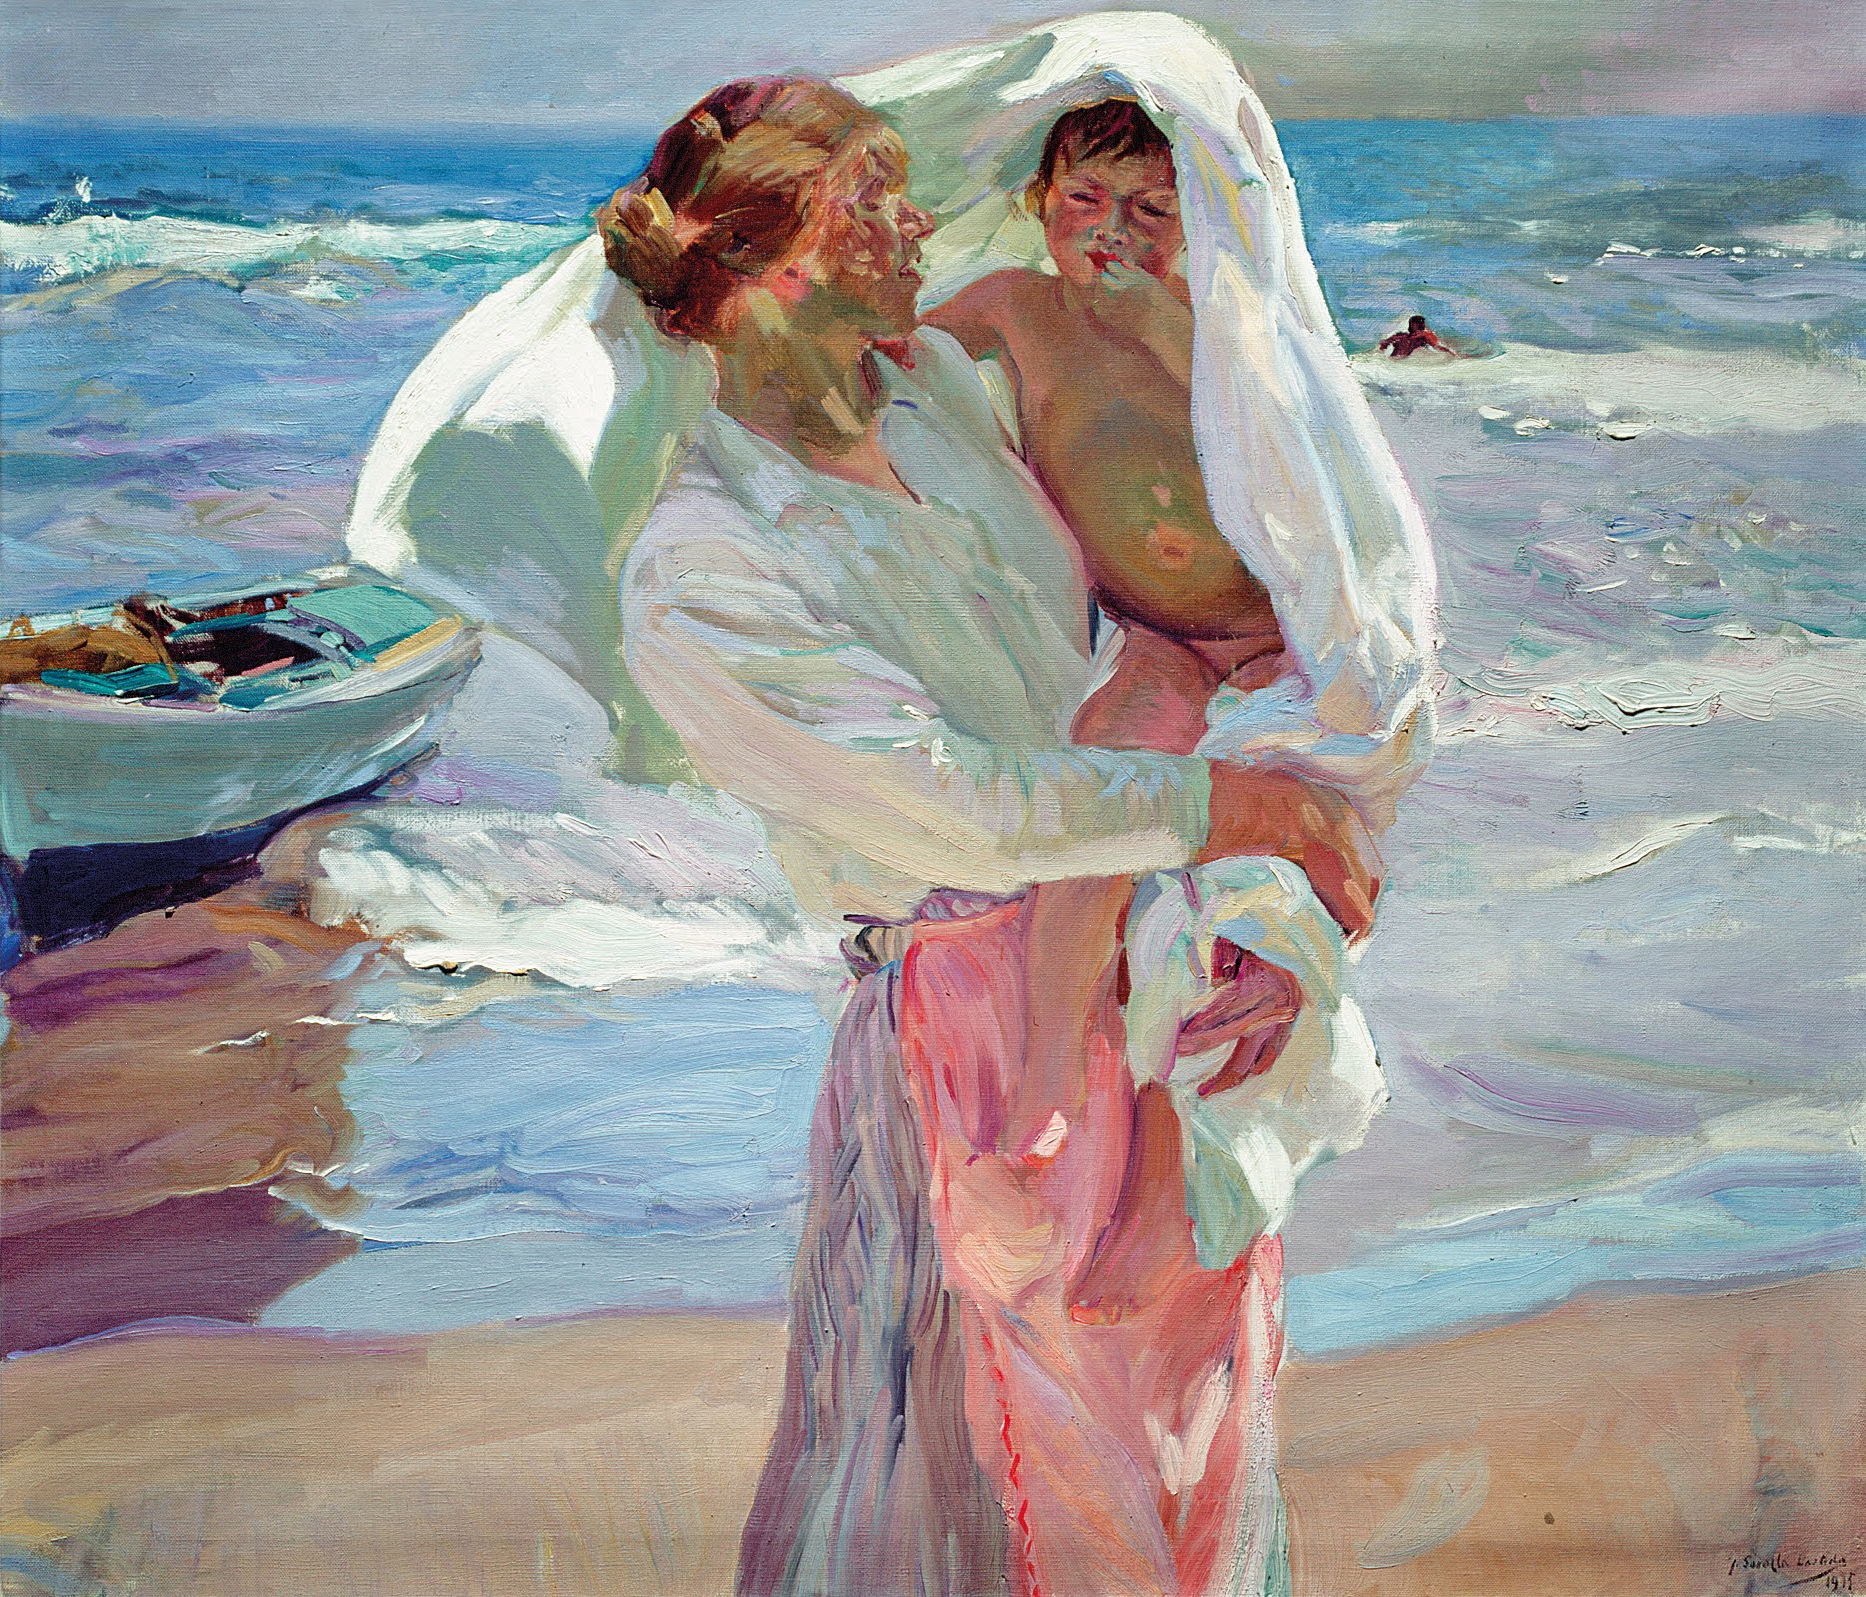 After Bathing by Joaquín Sorolla - 1915 - 130 x 150.5 cm Museo Sorolla